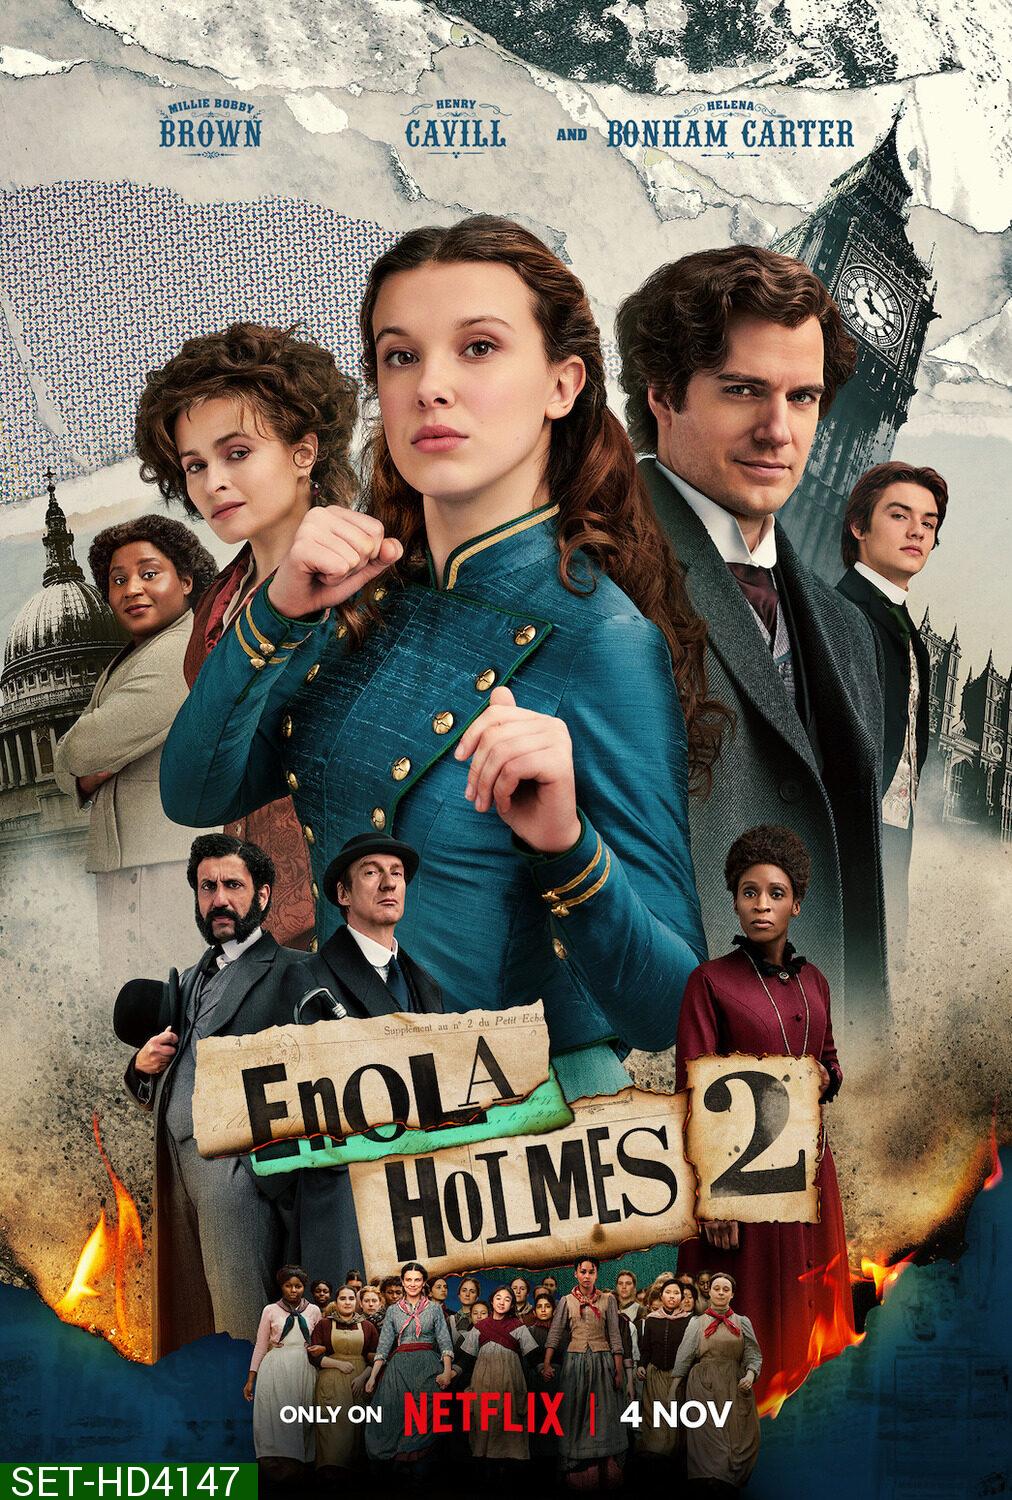 Enola Holmes เอโนลา โฮล์มส์ (2020-2022) DVD หนัง มาสเตอร์ พากย์ไทย